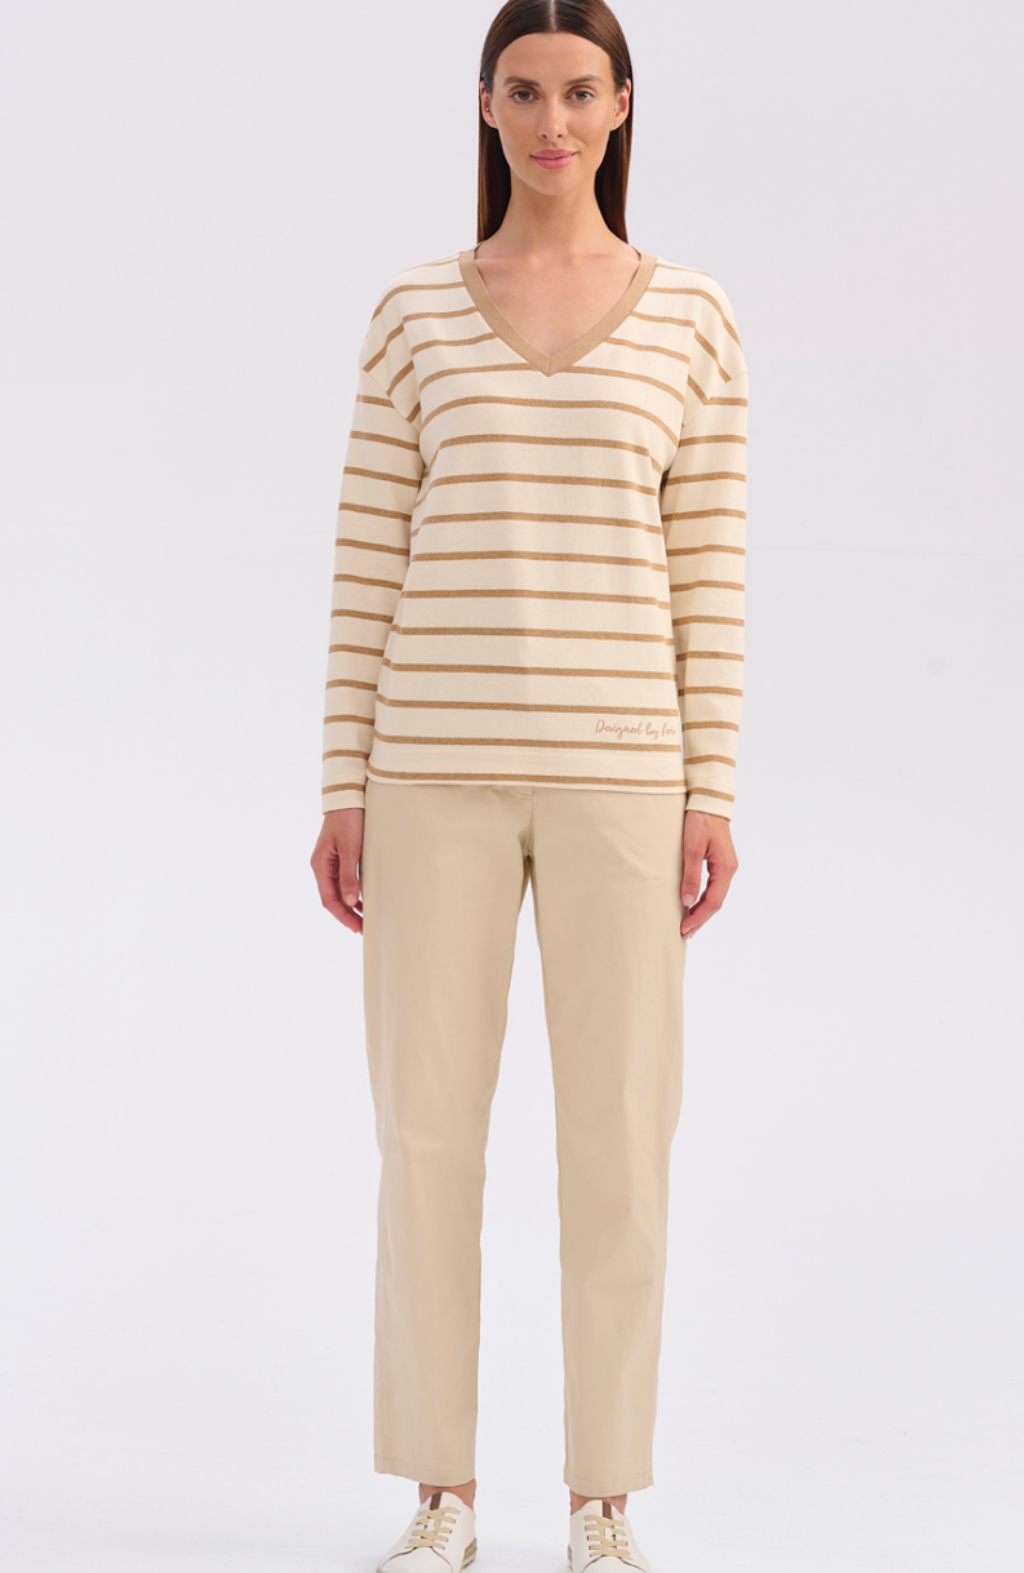 FERIA sports sweater with camel stripes